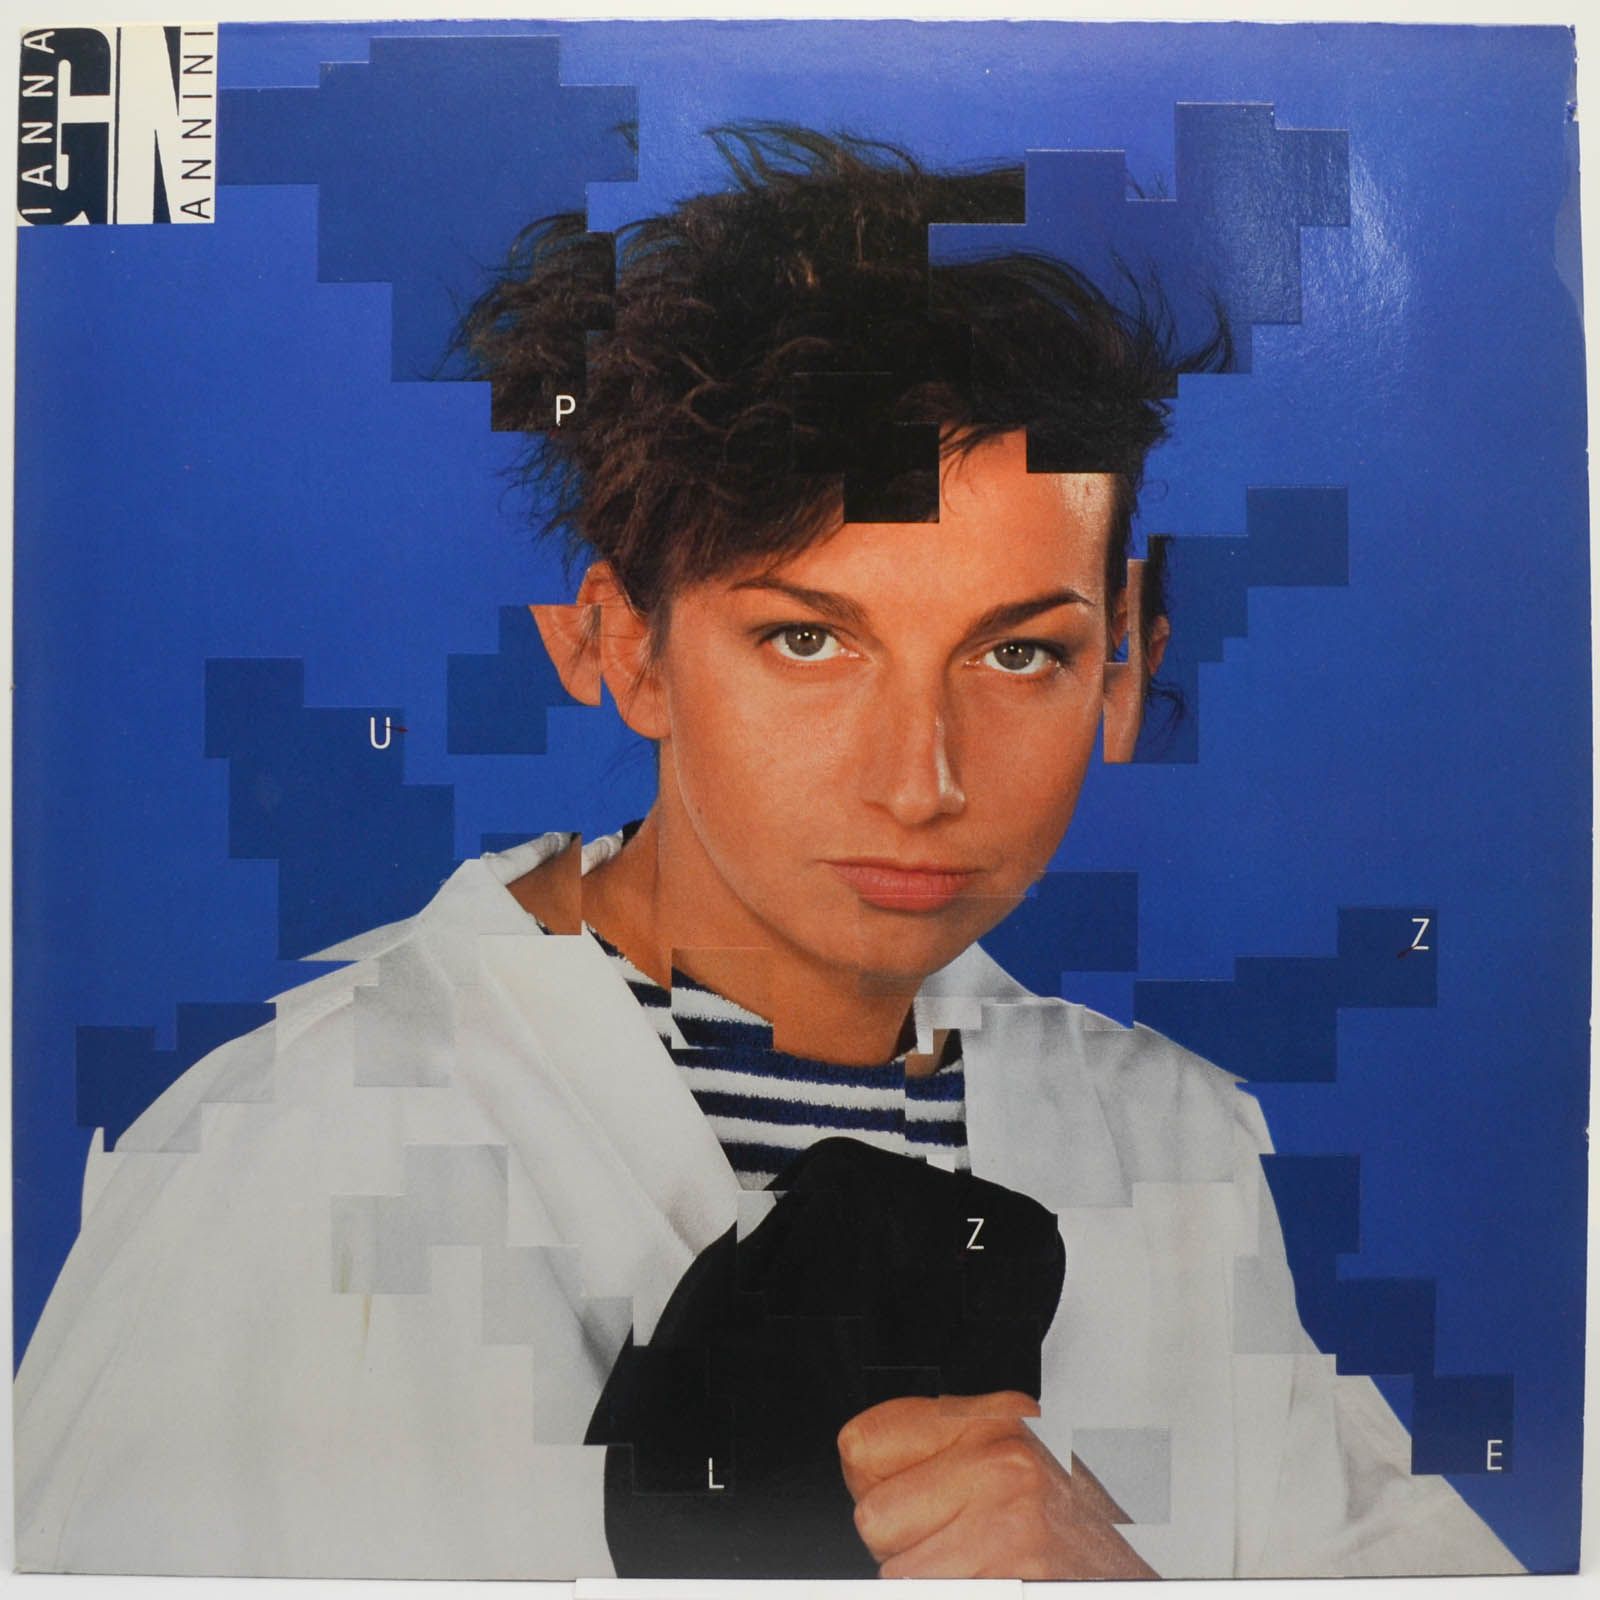 Gianna Nannini — Puzzle (poster), 1984